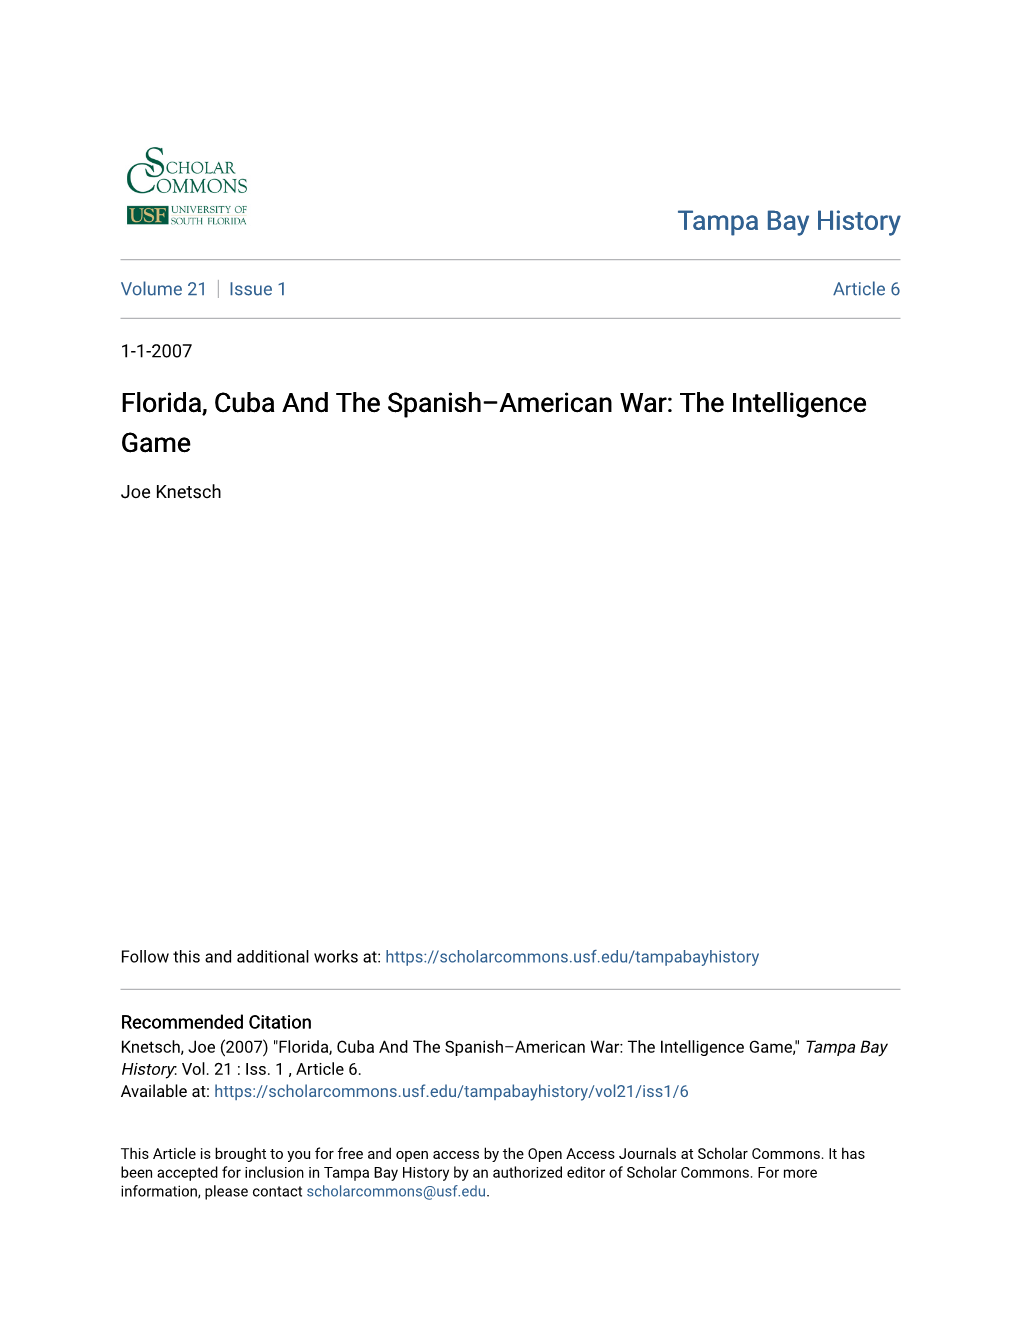 Florida, Cuba and the Spanishâ•Fiamerican War: the Intelligence